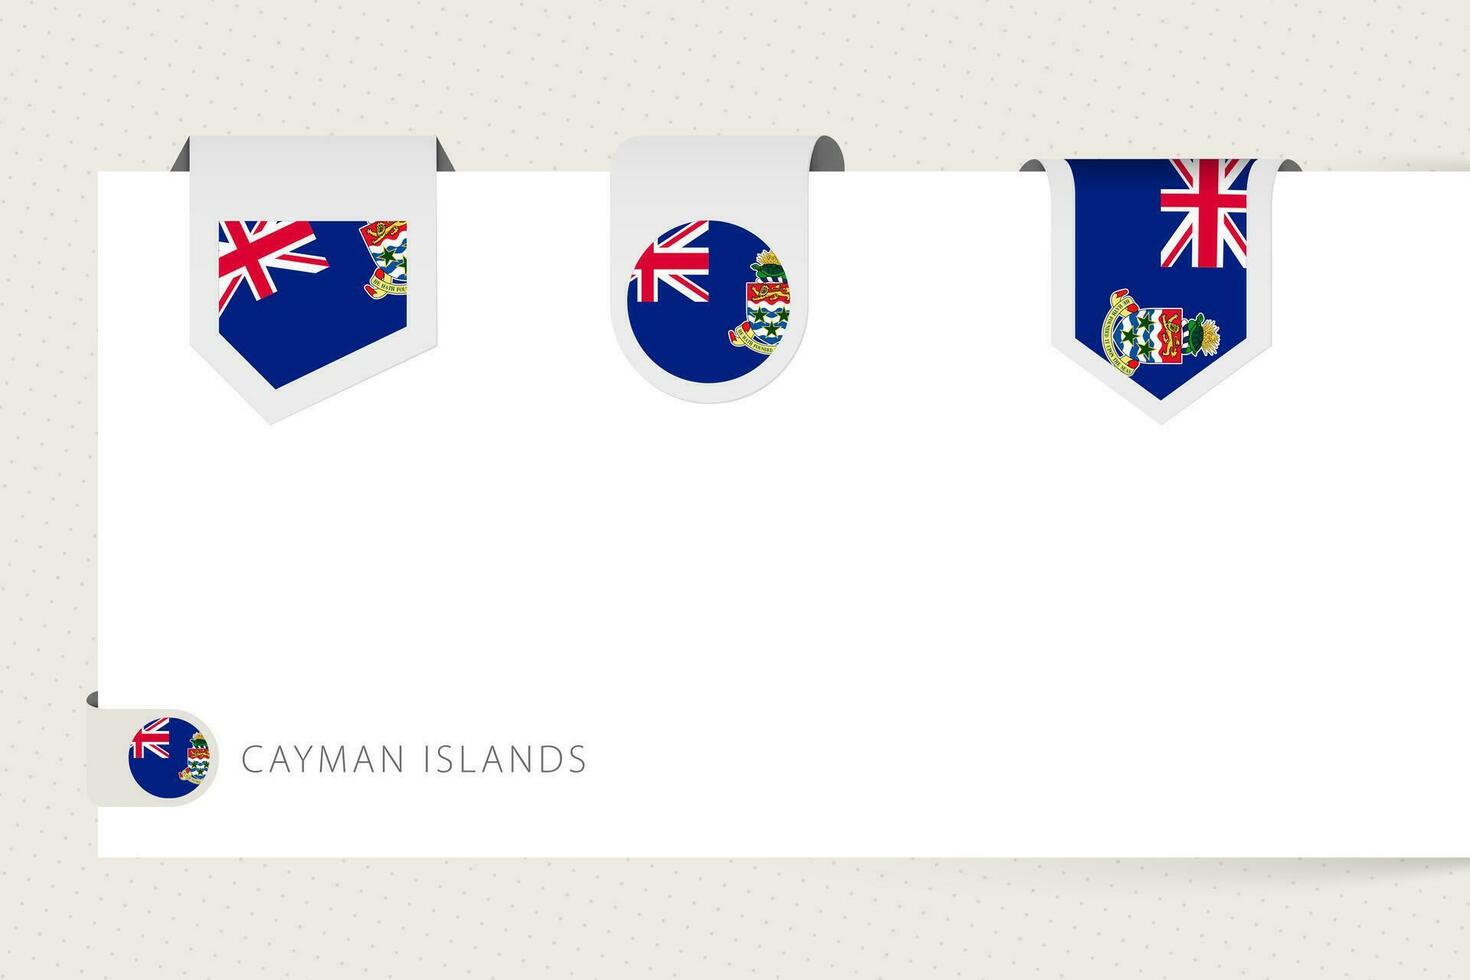 etiqueta bandera colección de caimán islas en diferente forma. cinta bandera modelo de caimán islas vector